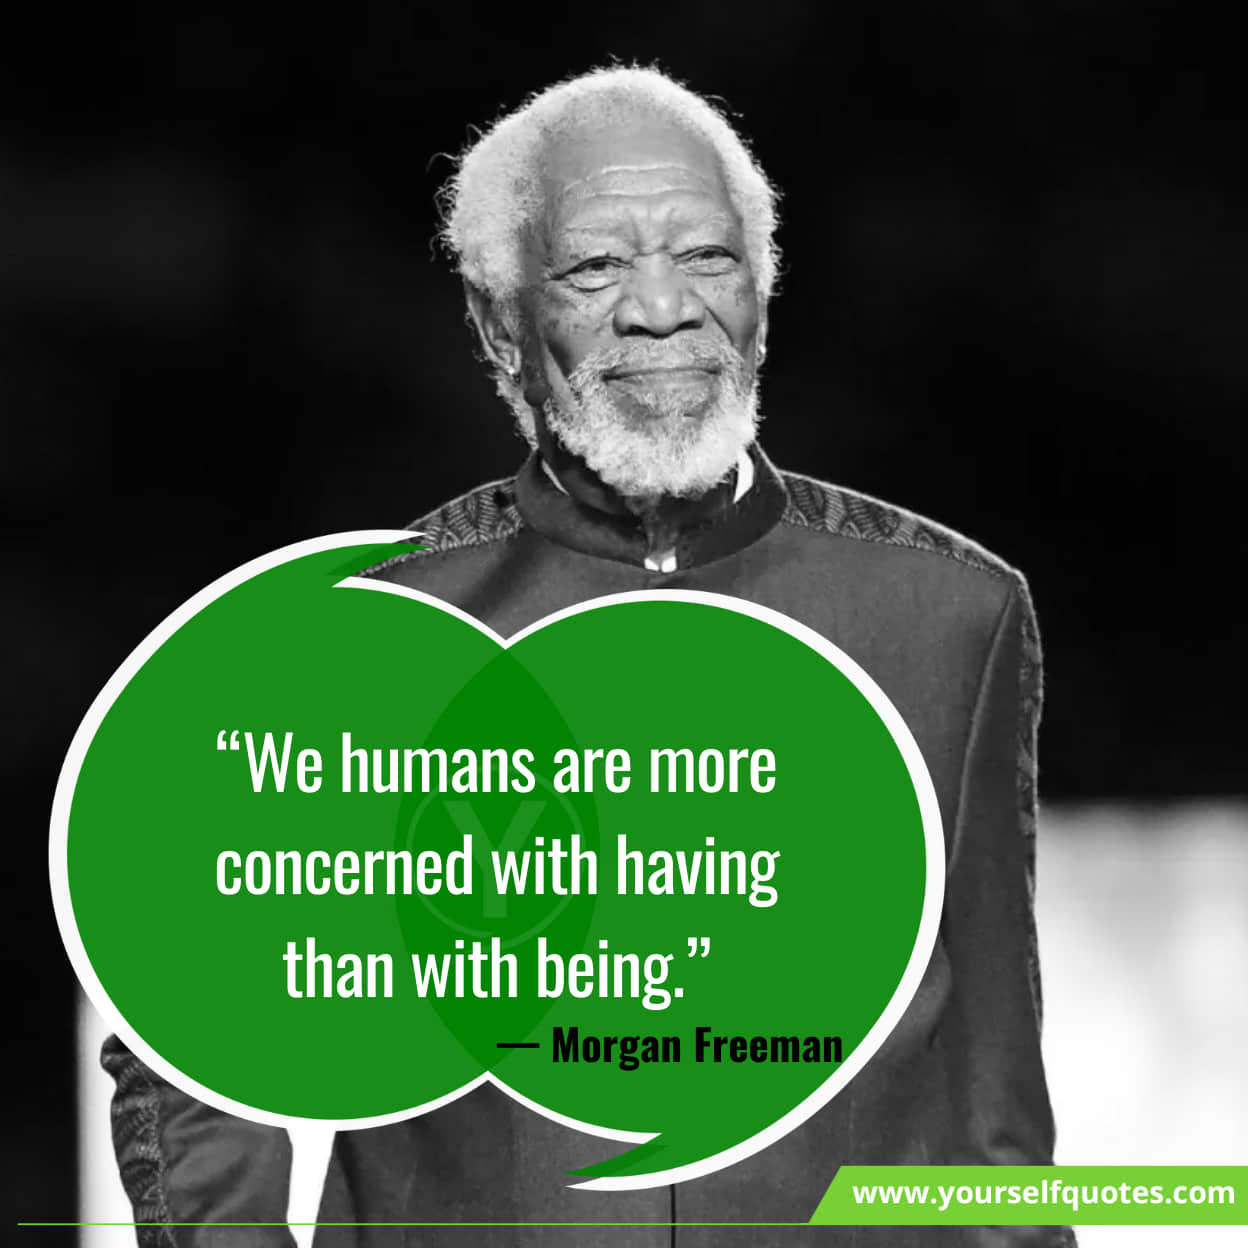 Morgan Freeman's Motivational Quotes For Life